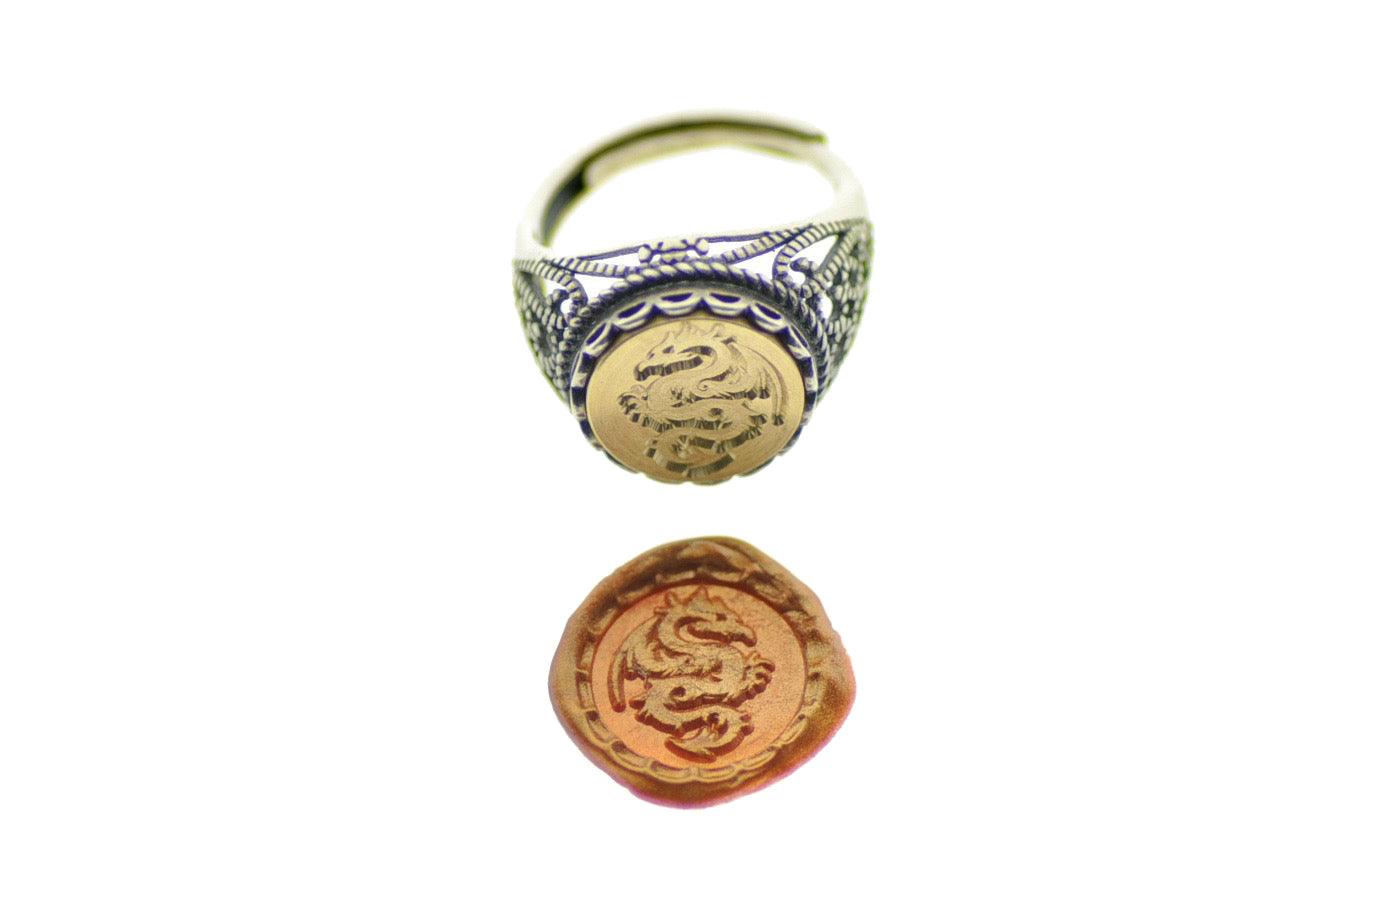 Decorative Filigree Signet Ring - Backtozero B20 - 12l, 12mm, 12mm ring, accessory, Deco, Decorative, Fleur de Lis, her, jewelry, lace, ring, signet ring, size 10, size 7, size 8, size 9, wax seal, wax seal ring, wax seal stamp